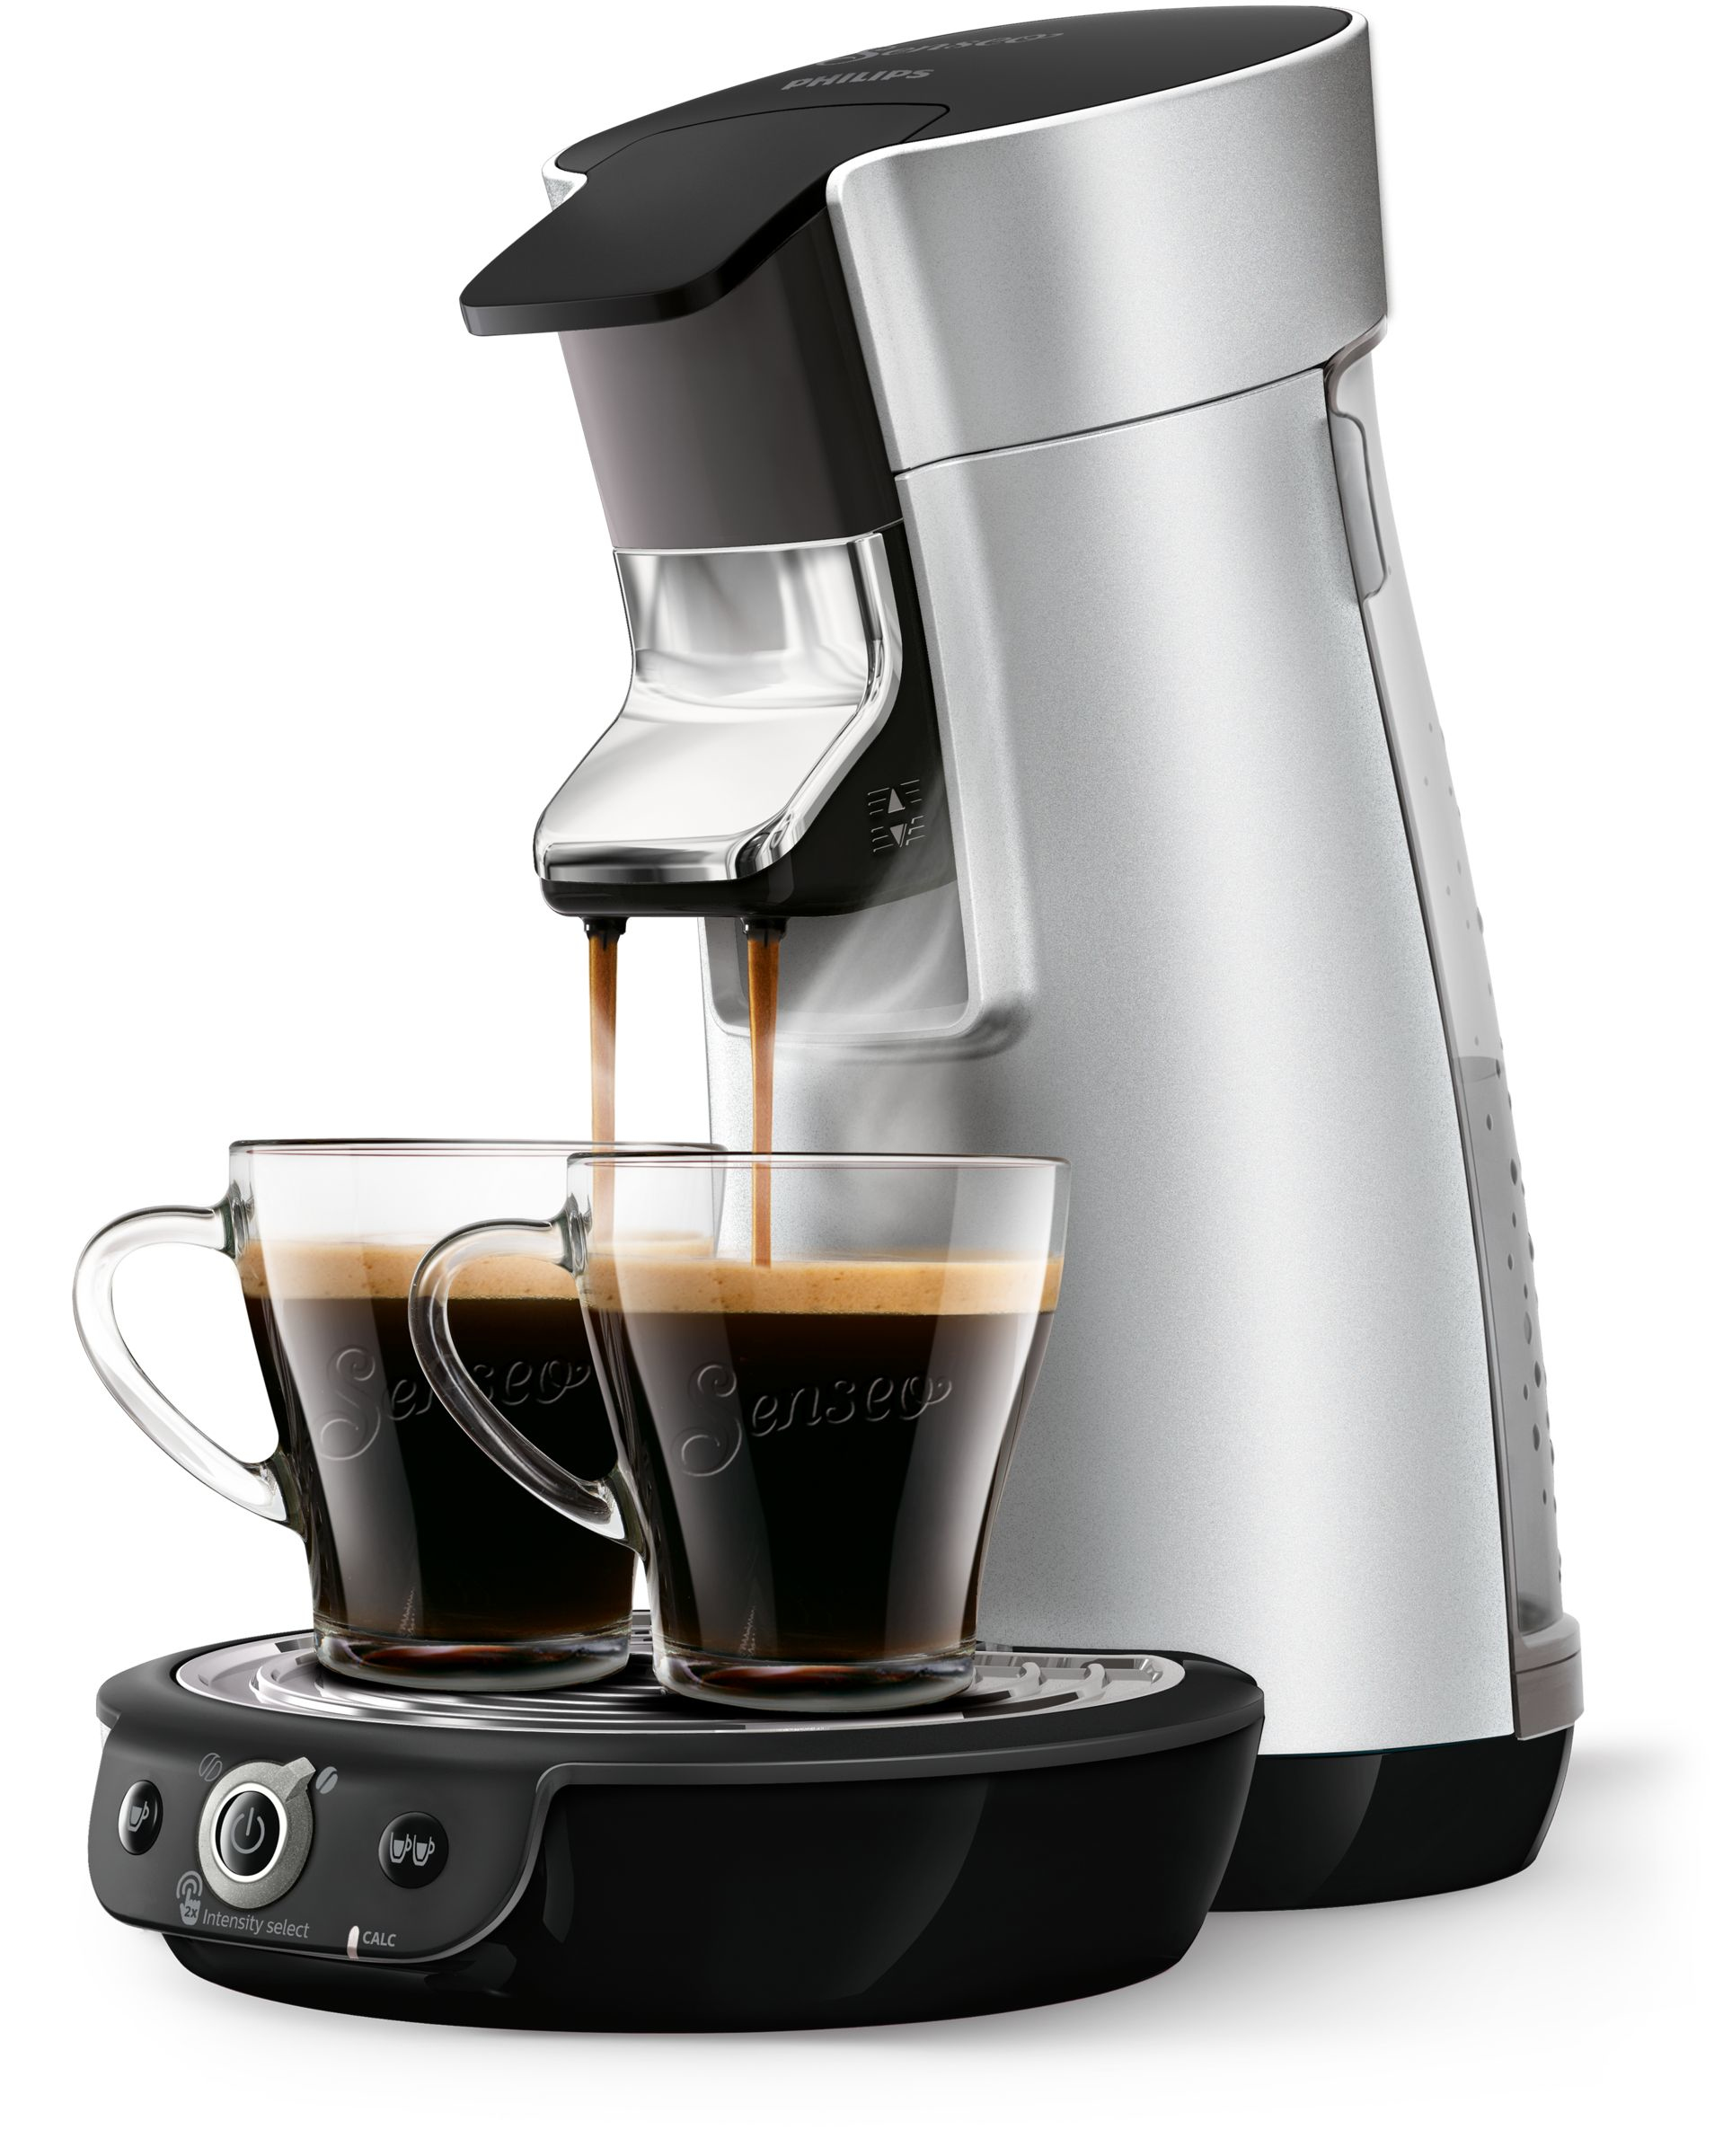 Senseo Viva Café HD6566/10 coffee maker